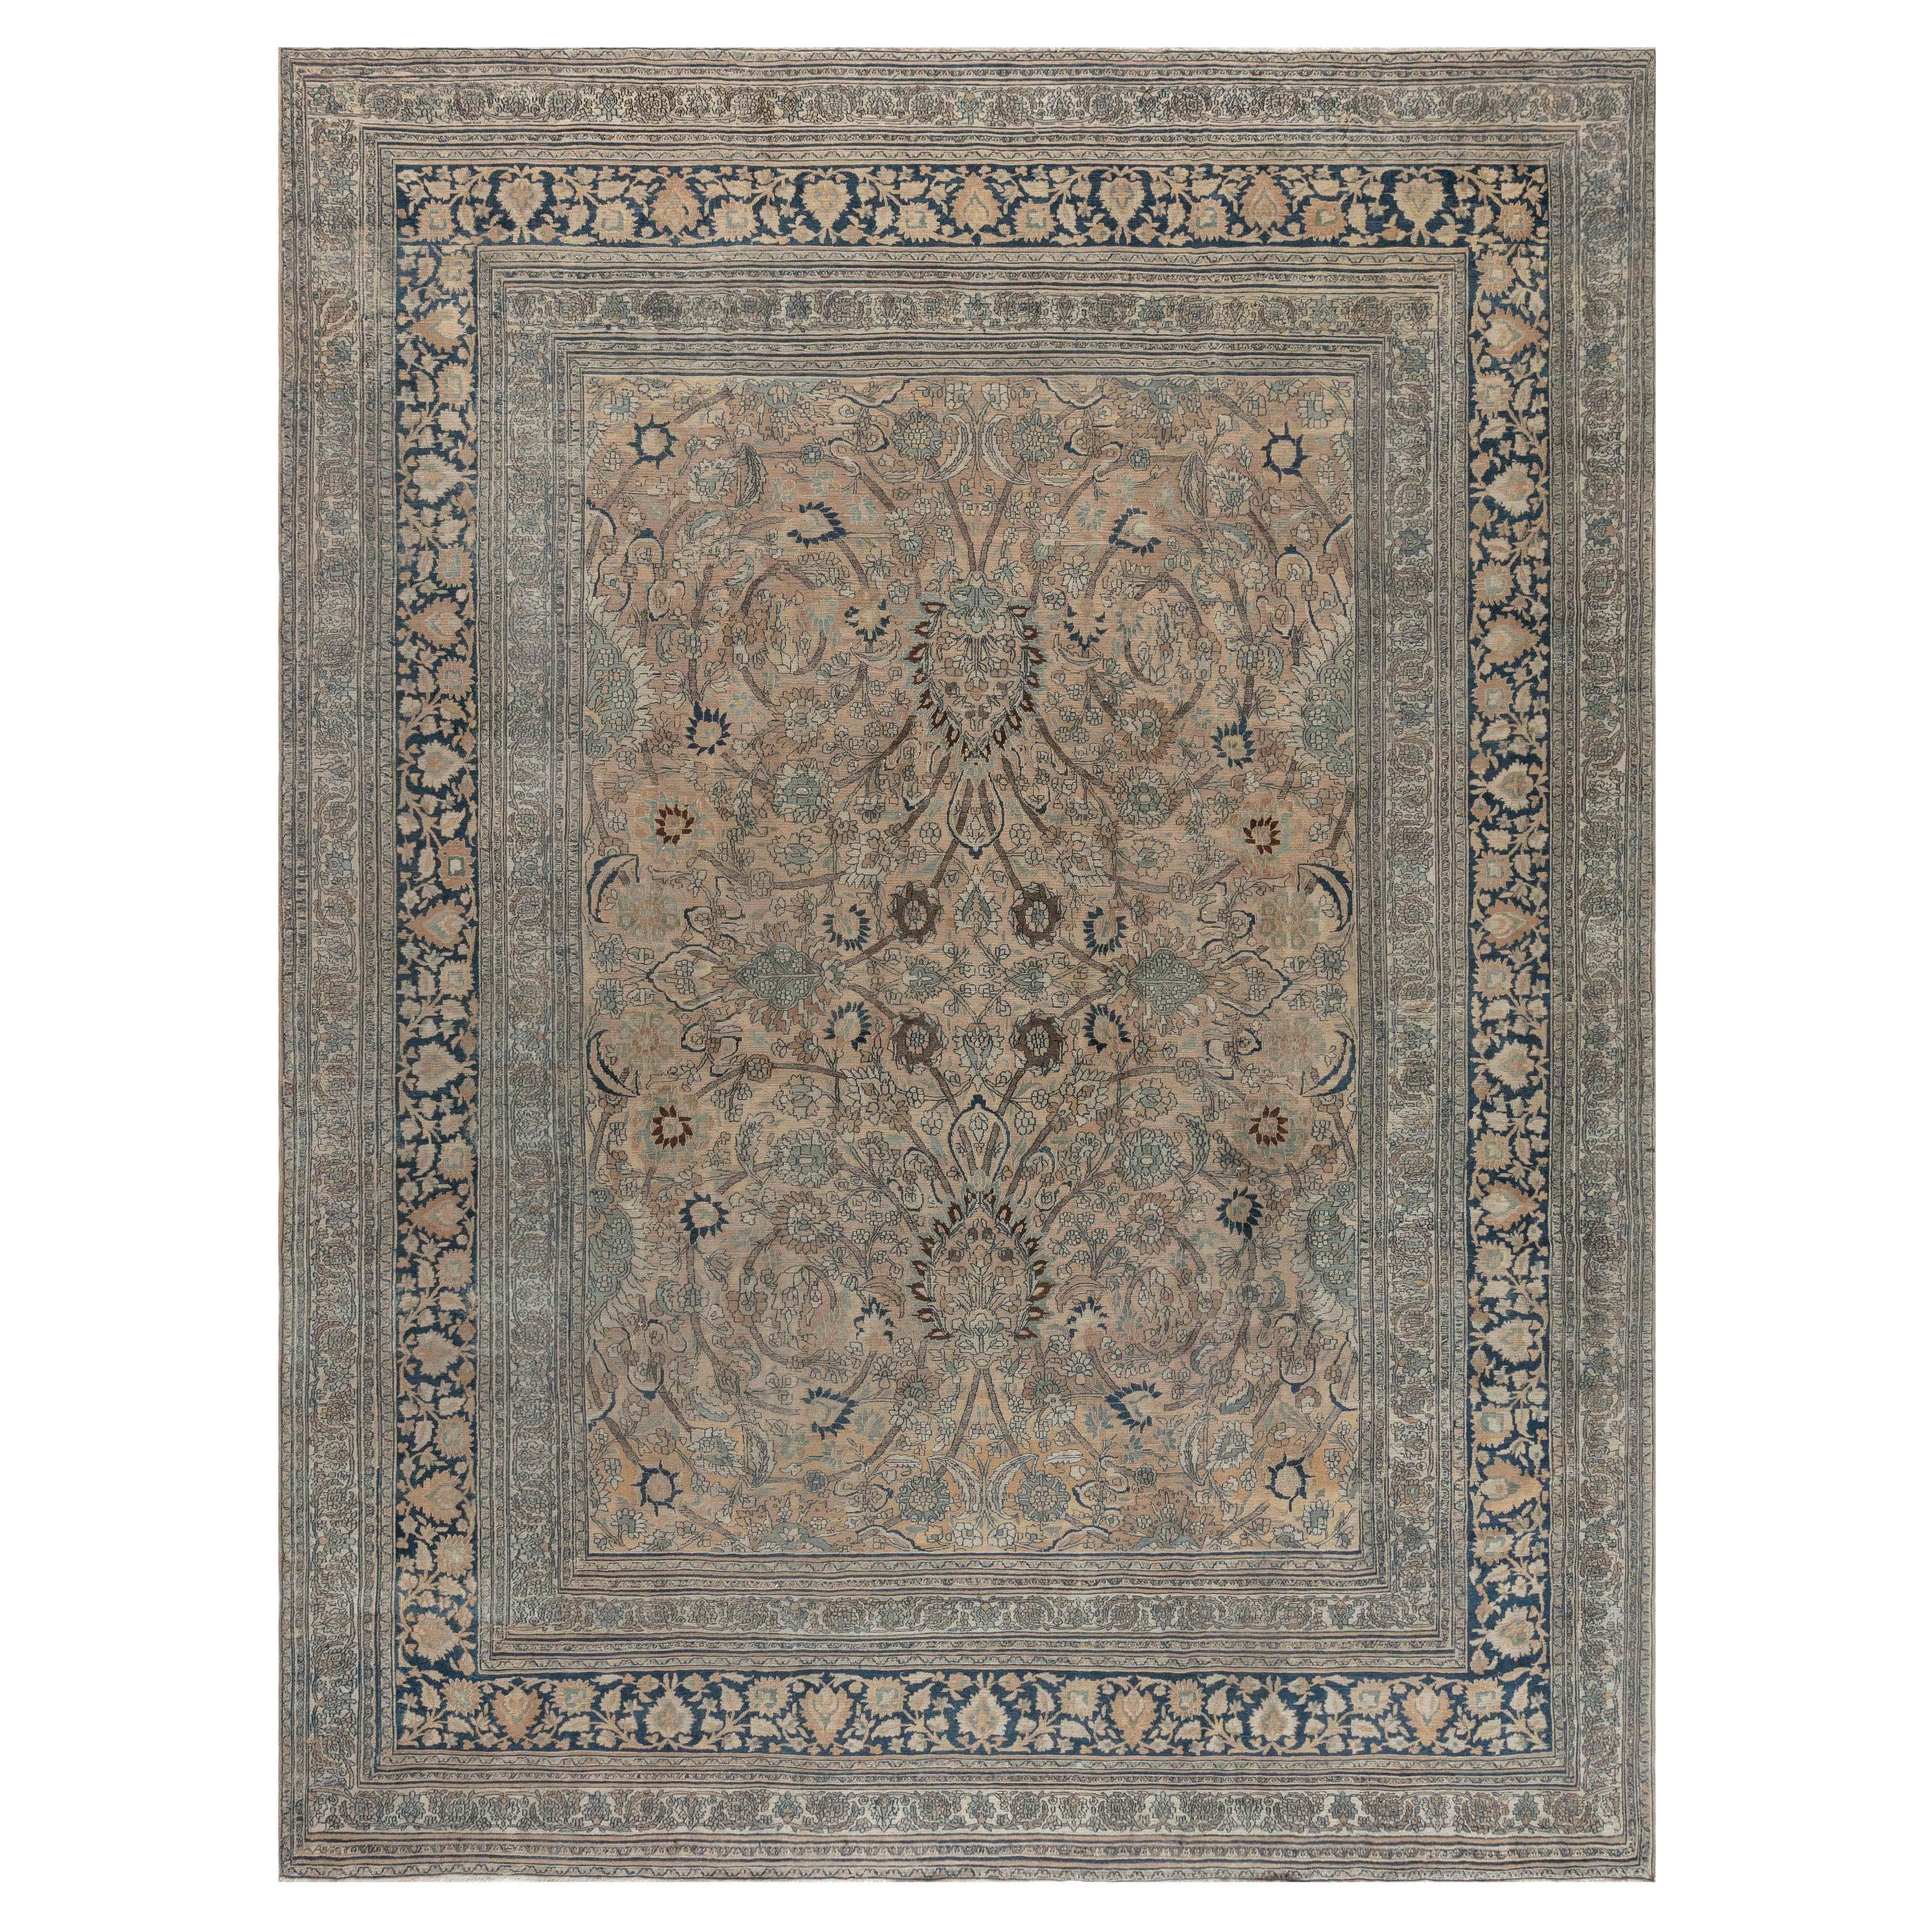 Authentic 19th Century Persian Meshad Handmade Wool Carpet